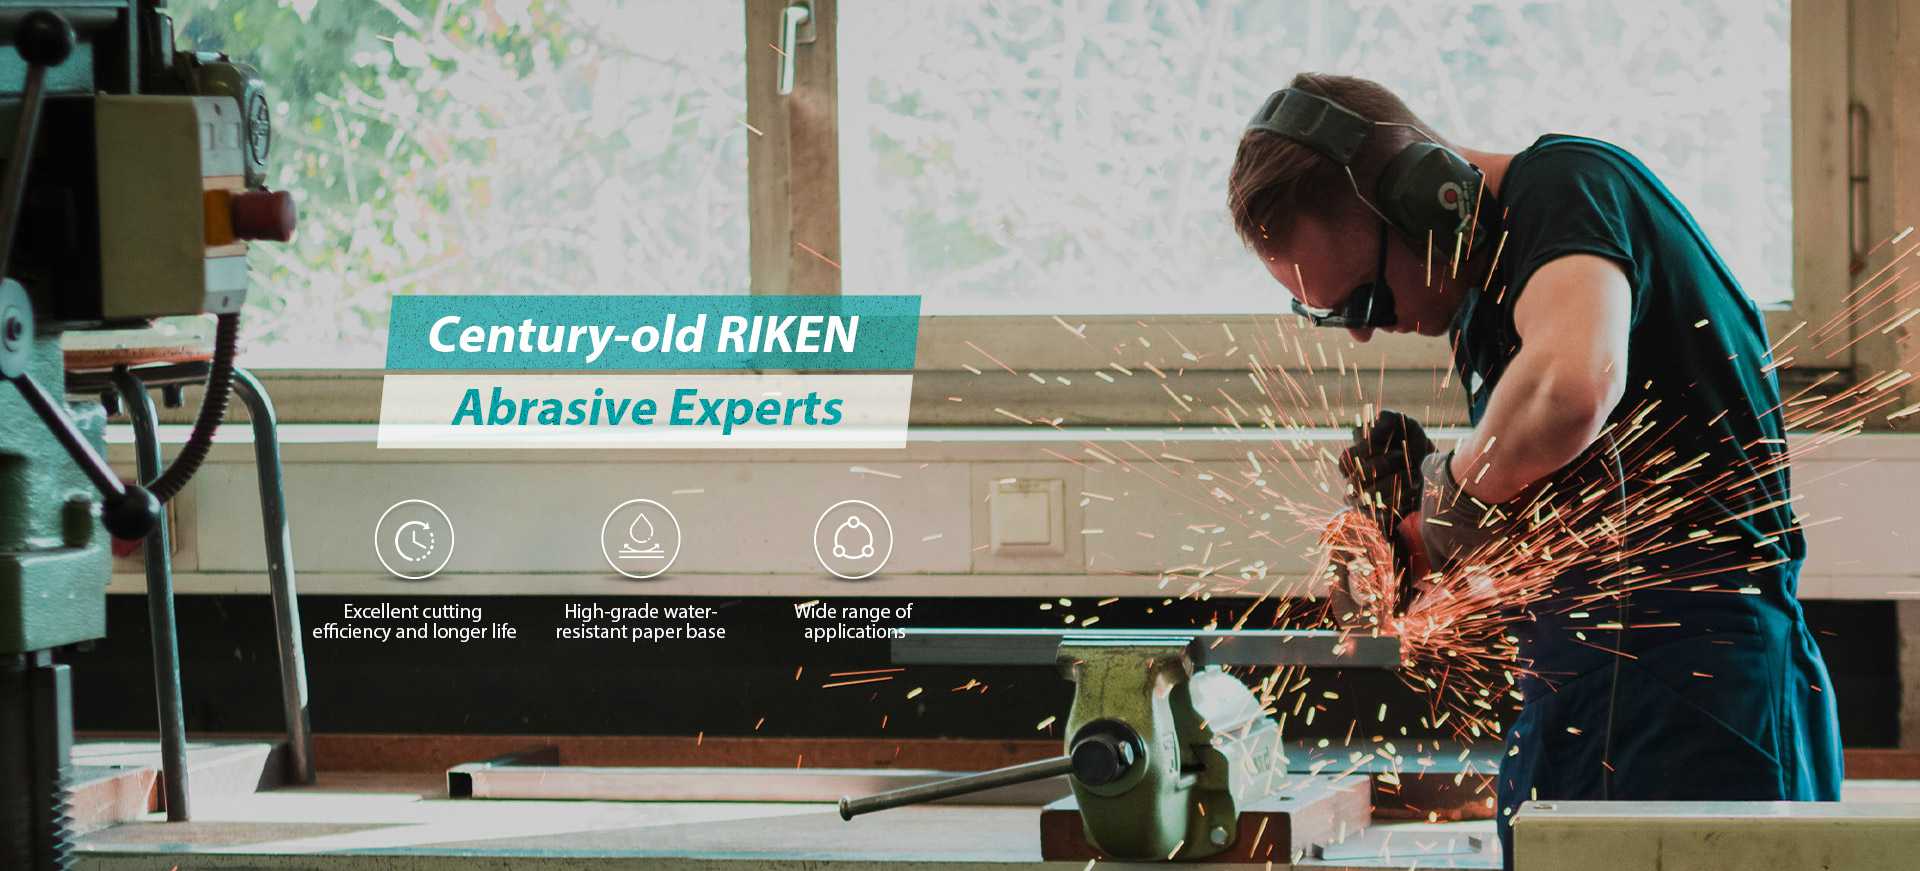 Century-old RIKEN, Abrasive Experts